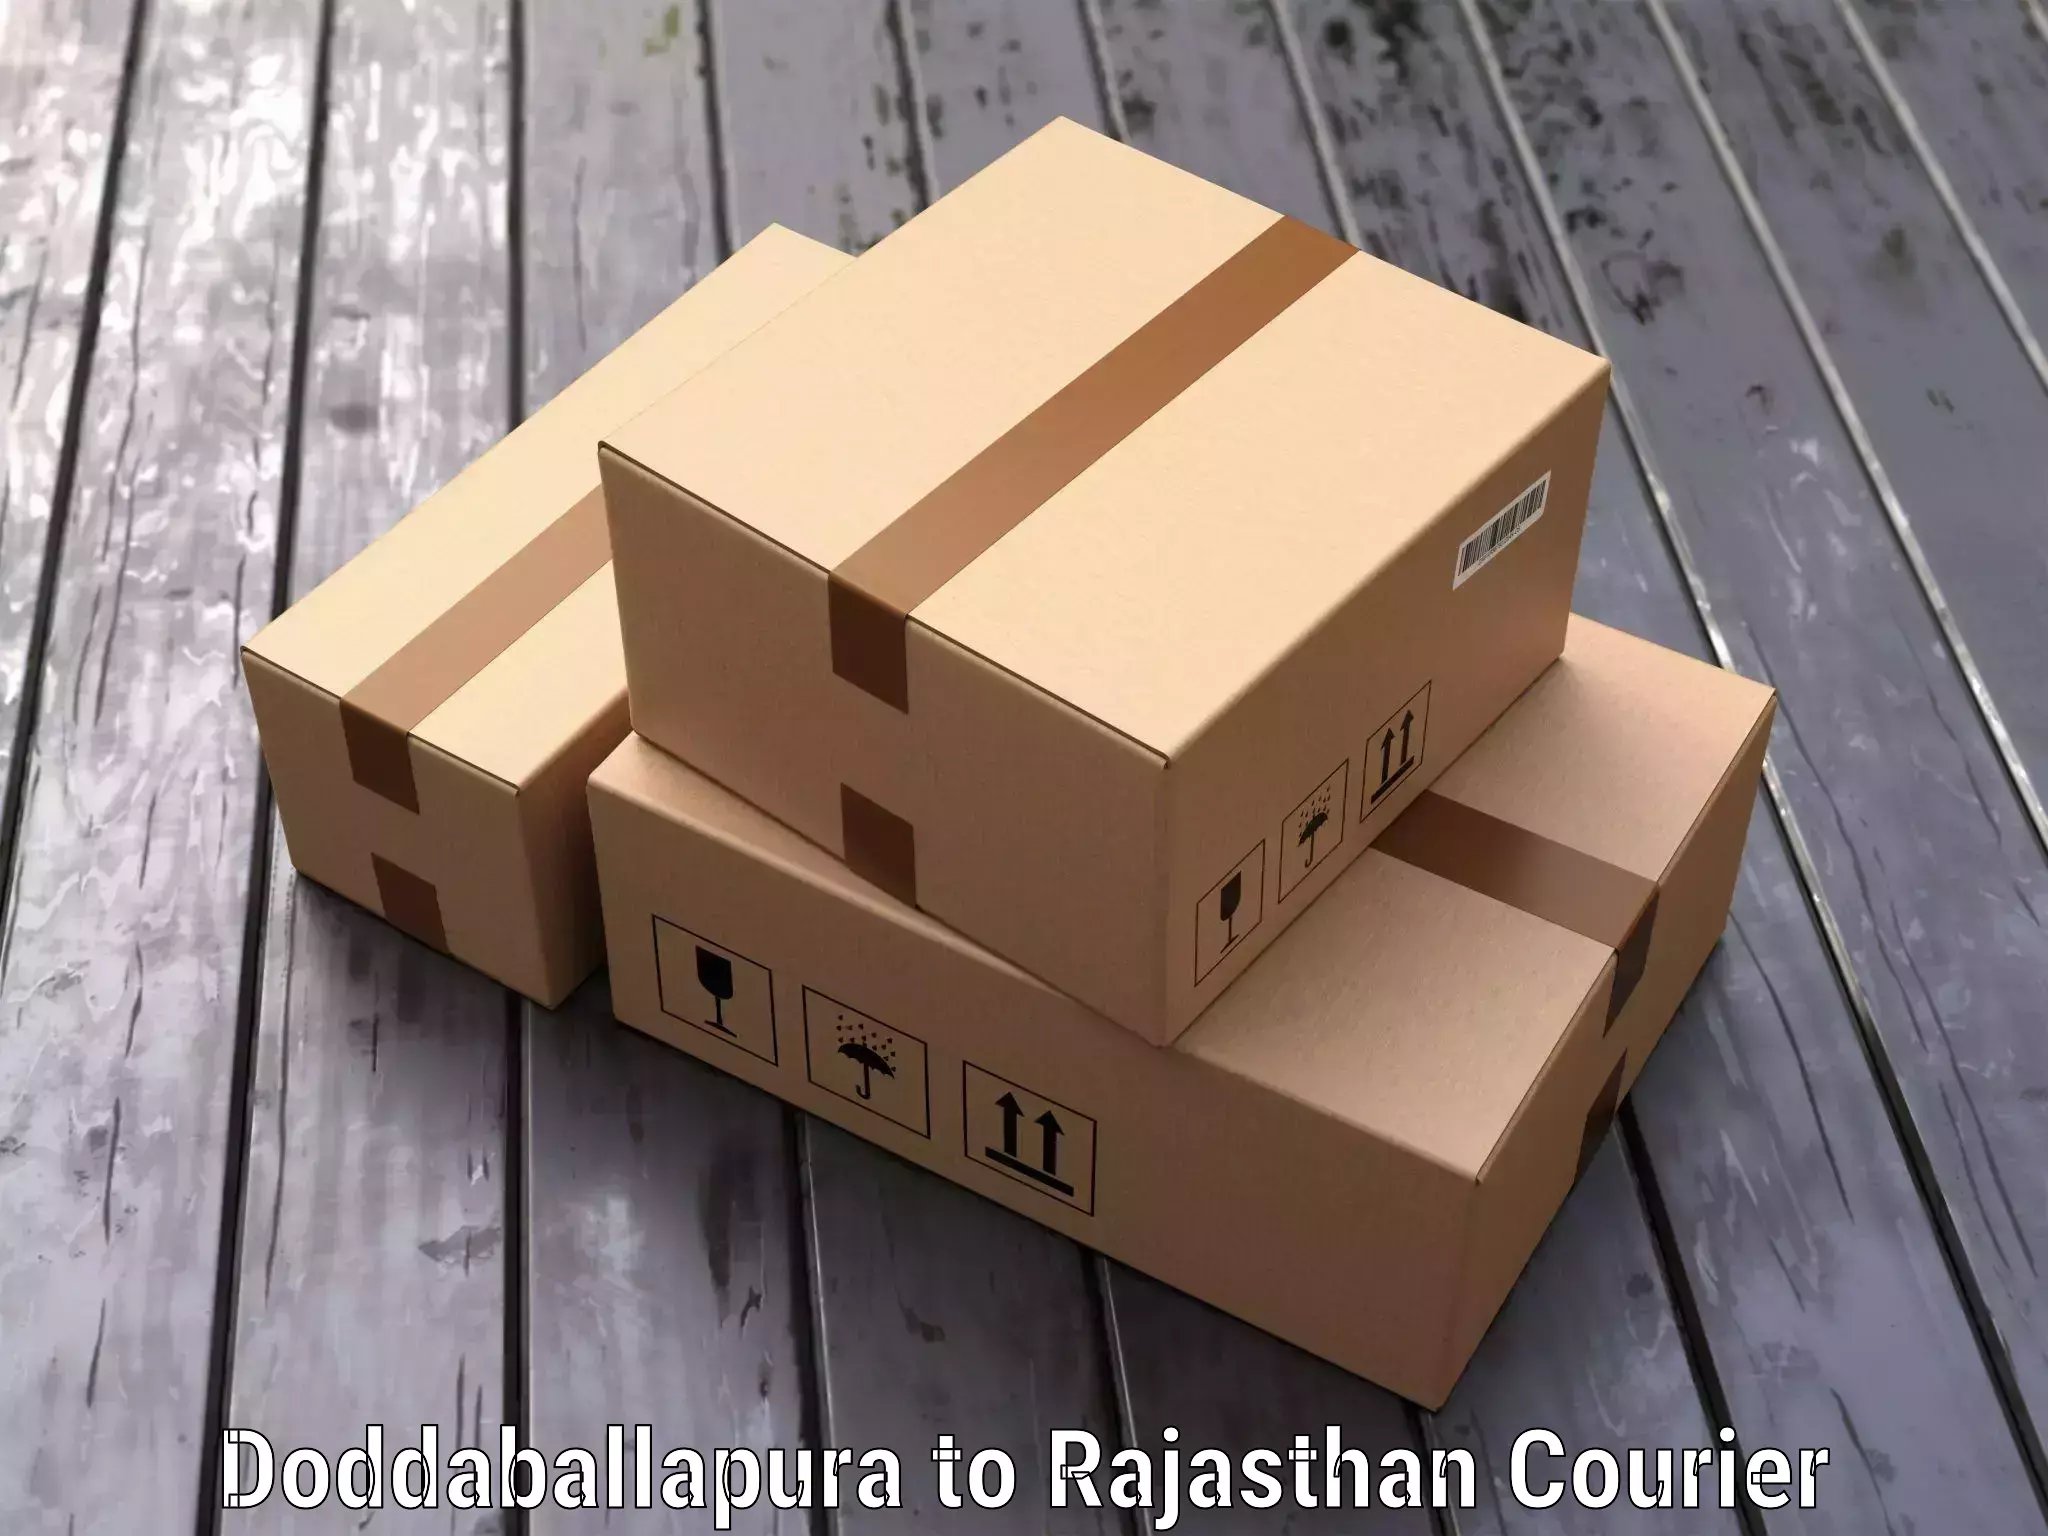 Luggage shipment specialists Doddaballapura to Rajasthan